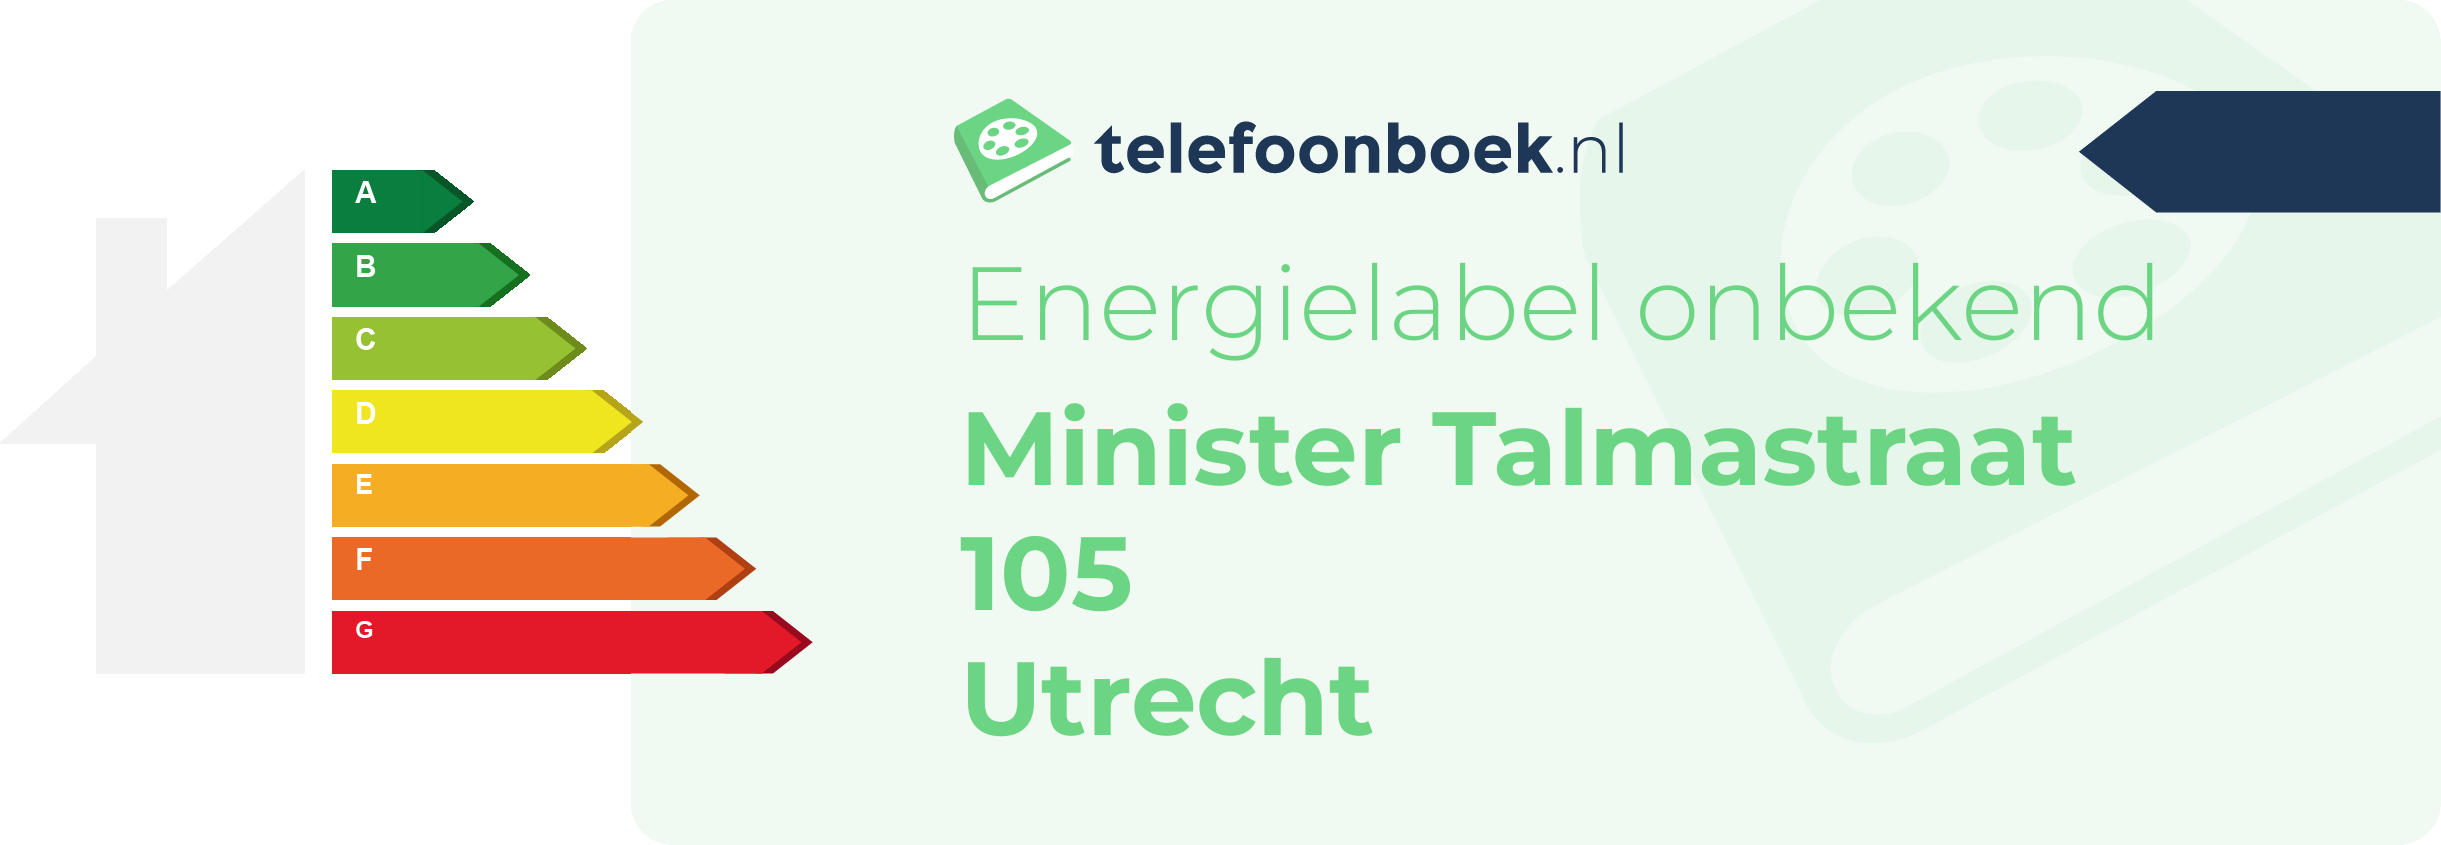 Energielabel Minister Talmastraat 105 Utrecht